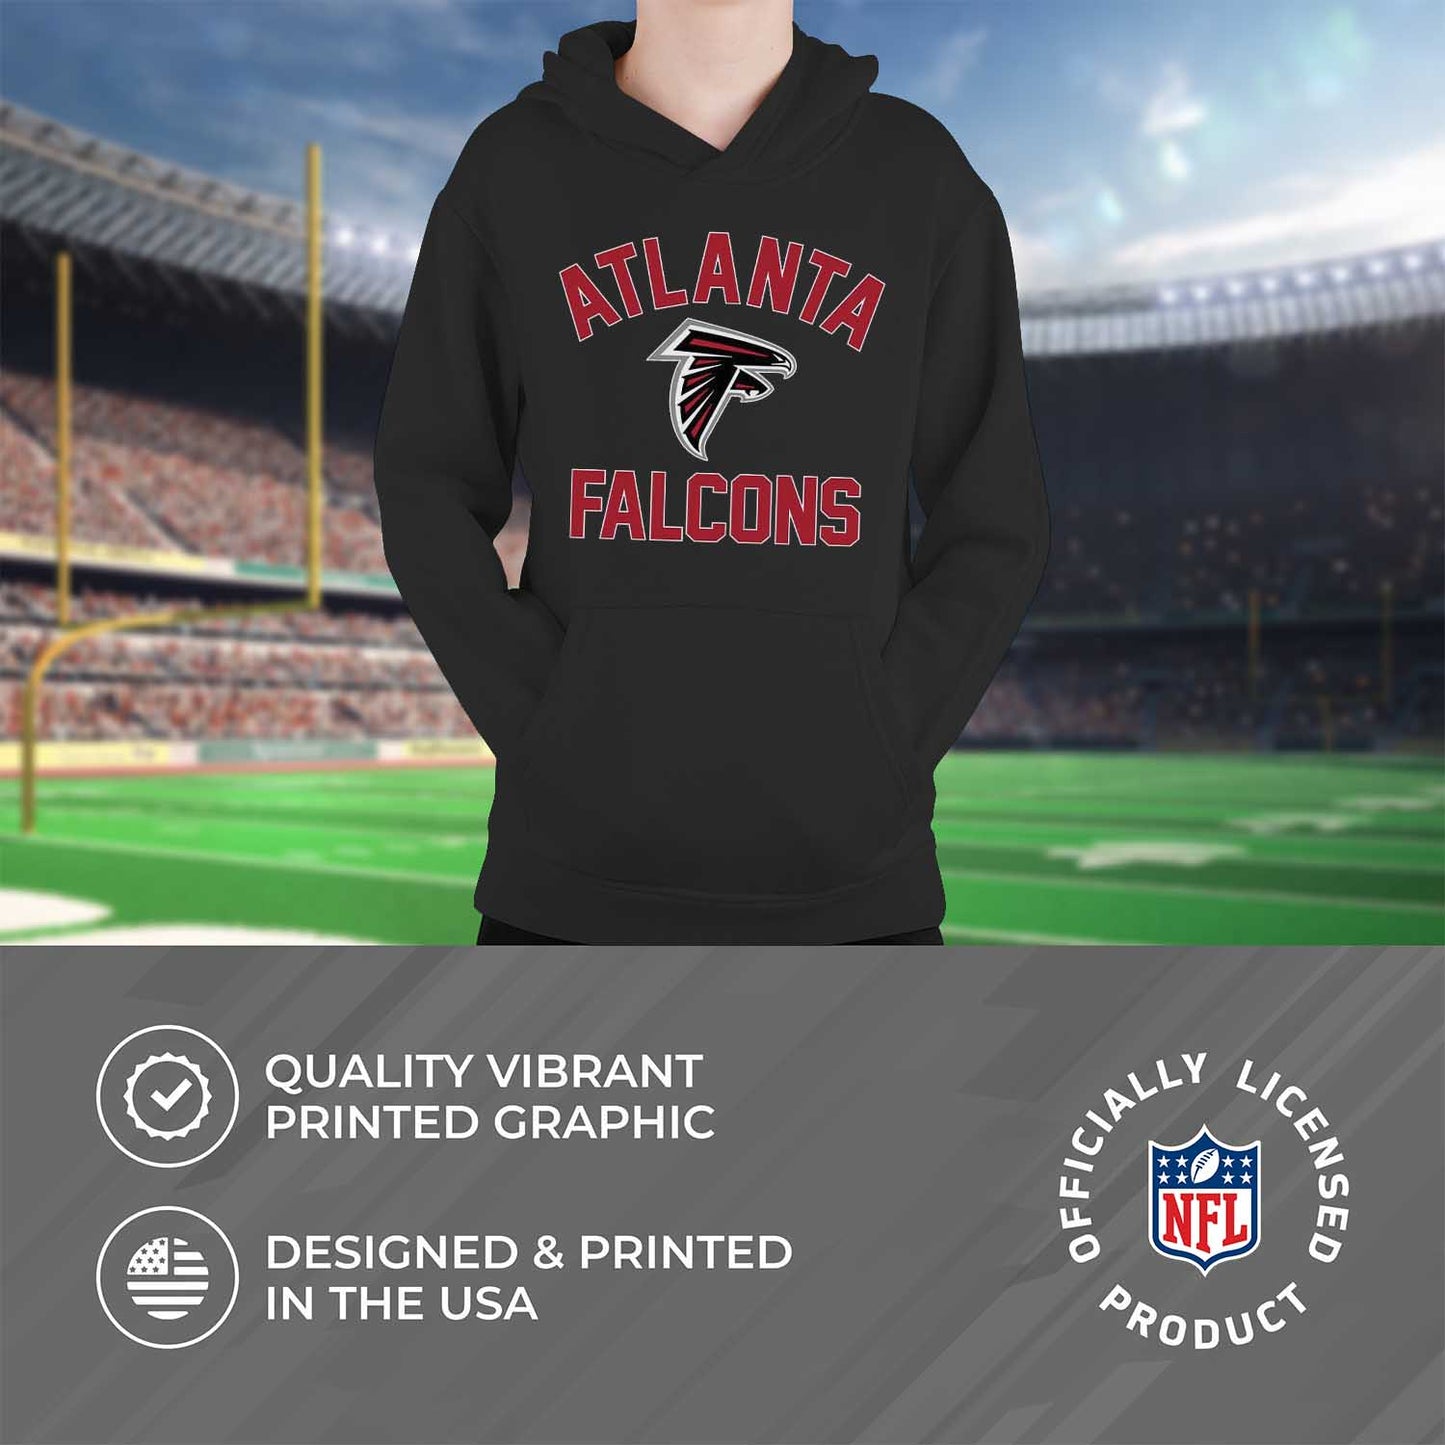 Atlanta Falcons NFL Youth Gameday Hooded Sweatshirt - Black